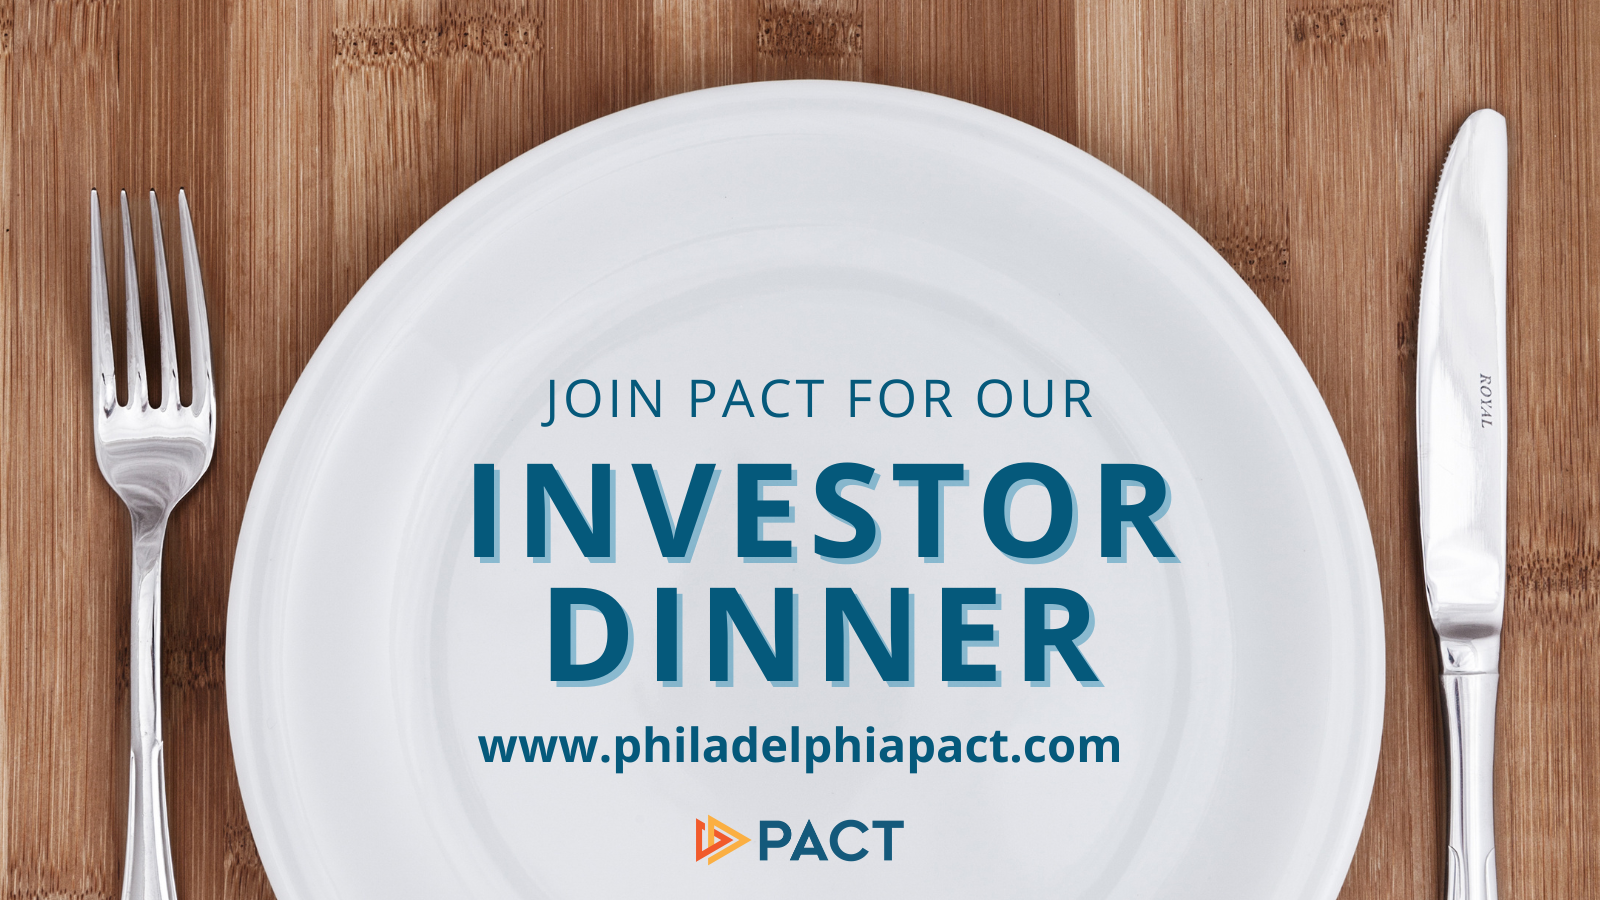 Image sharing information regarding the PACT Investor Dinner